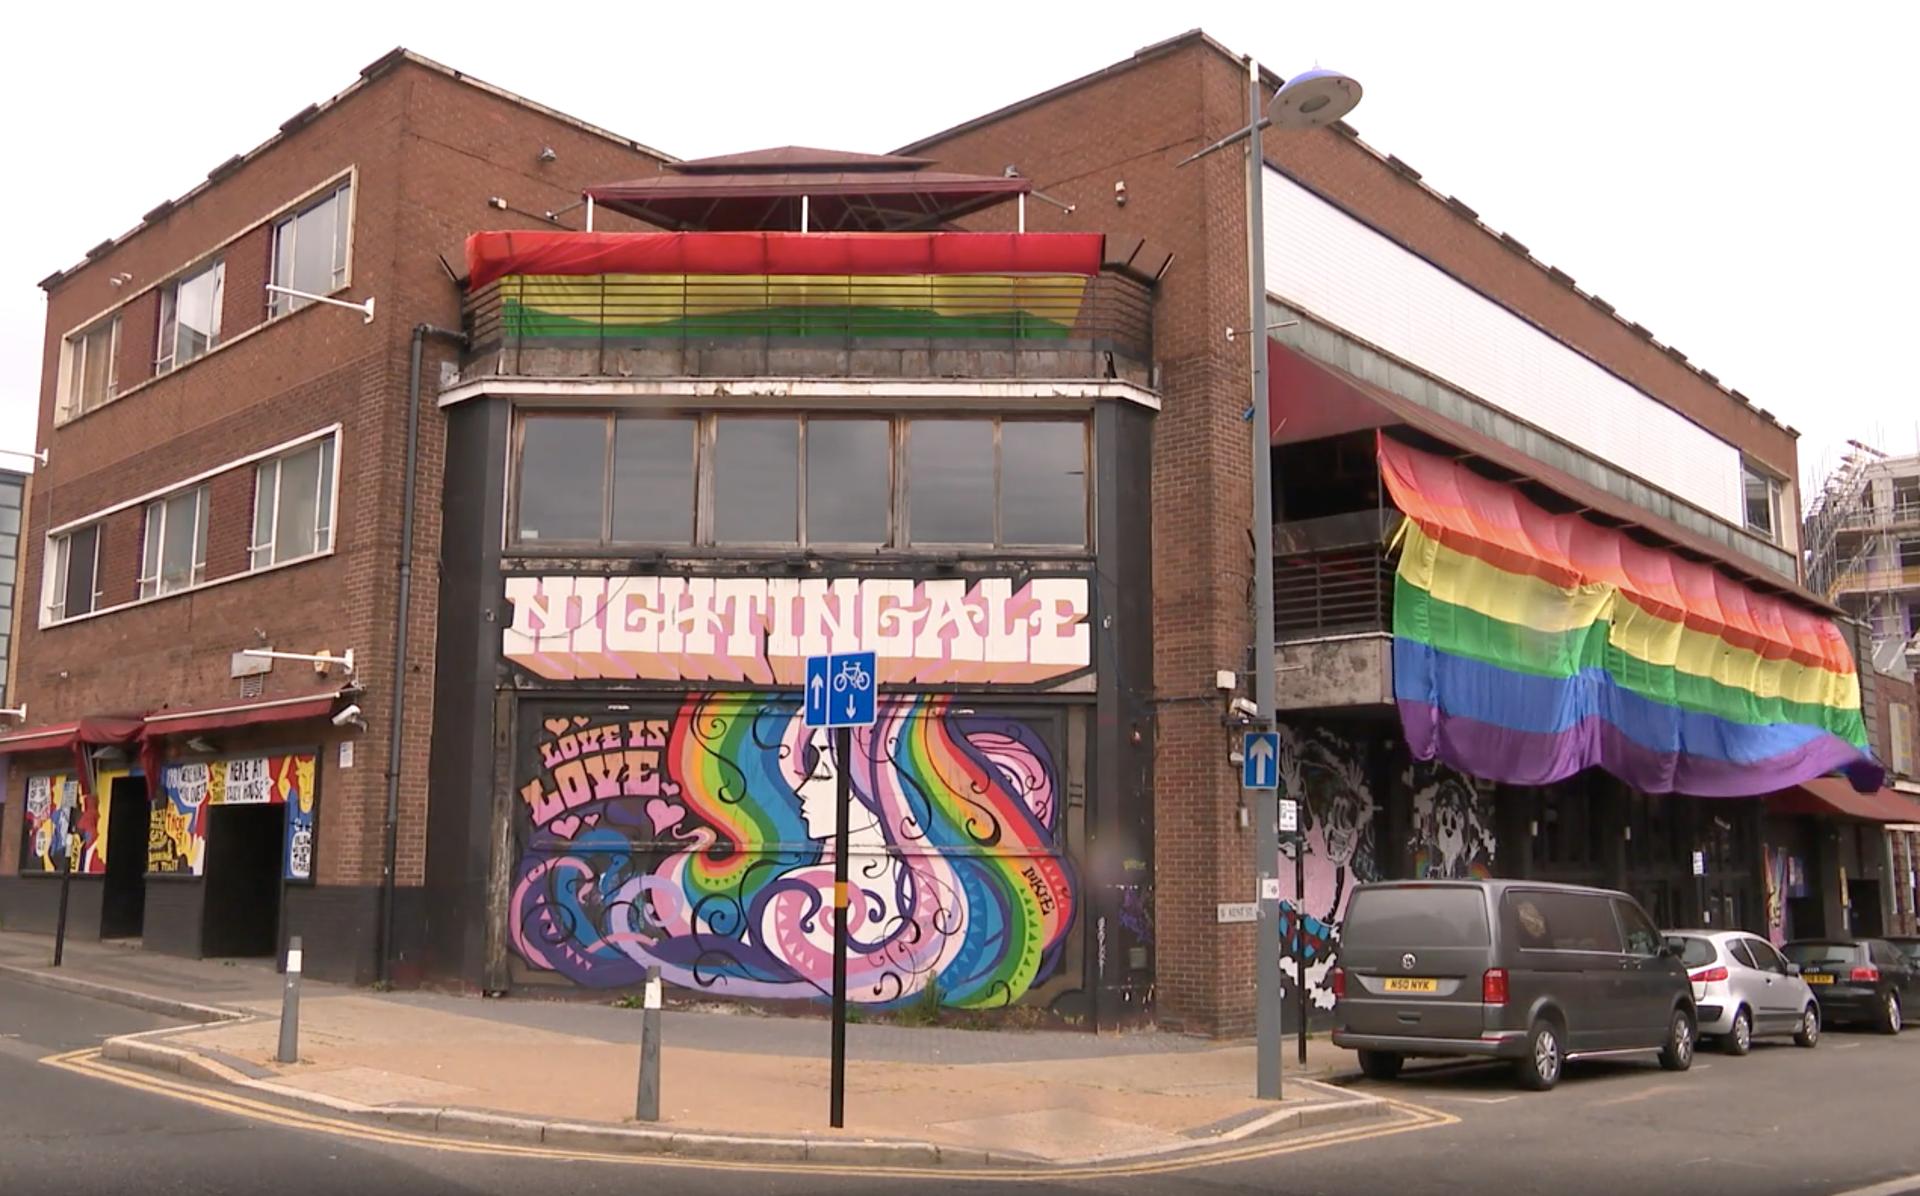 Birmingham LGBTQ+ nightlife companies acquired in MBO